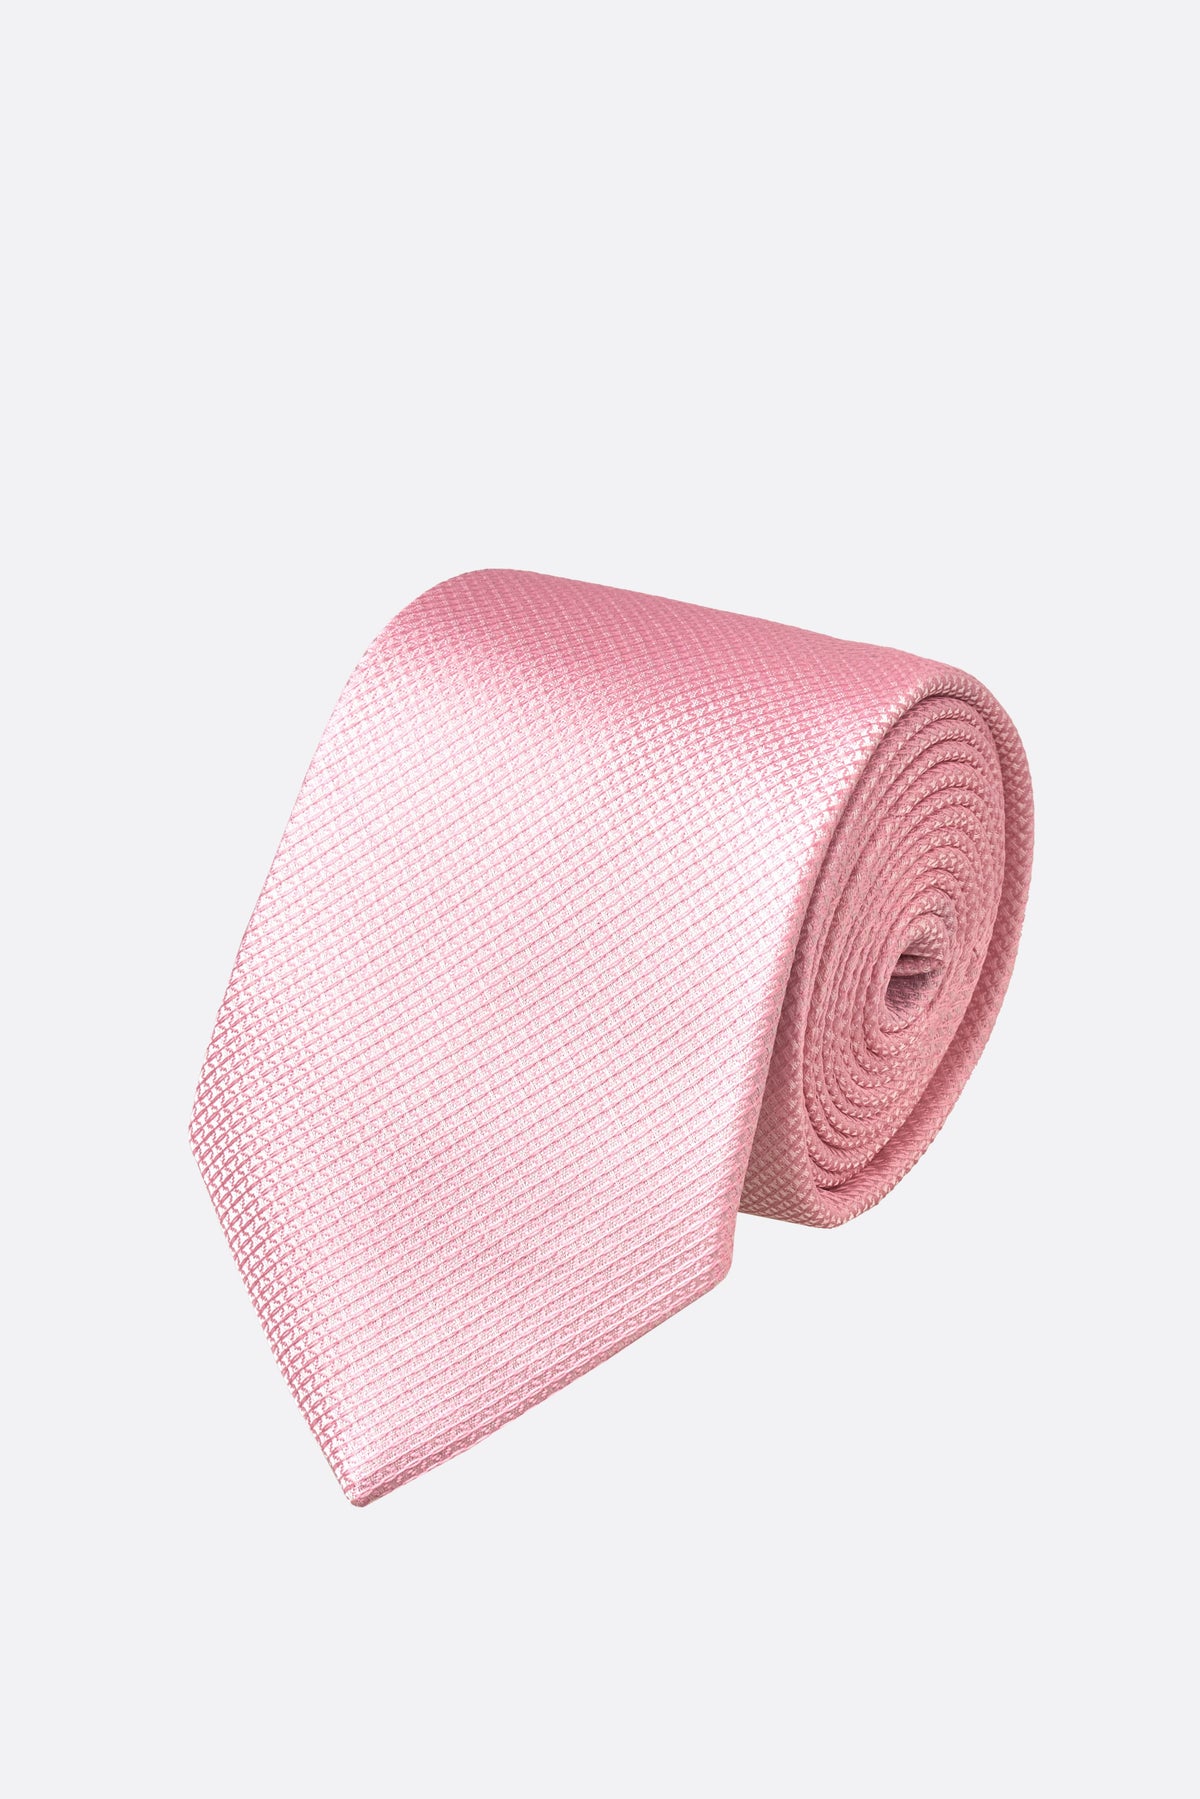 Santoro Milan Pink Tie